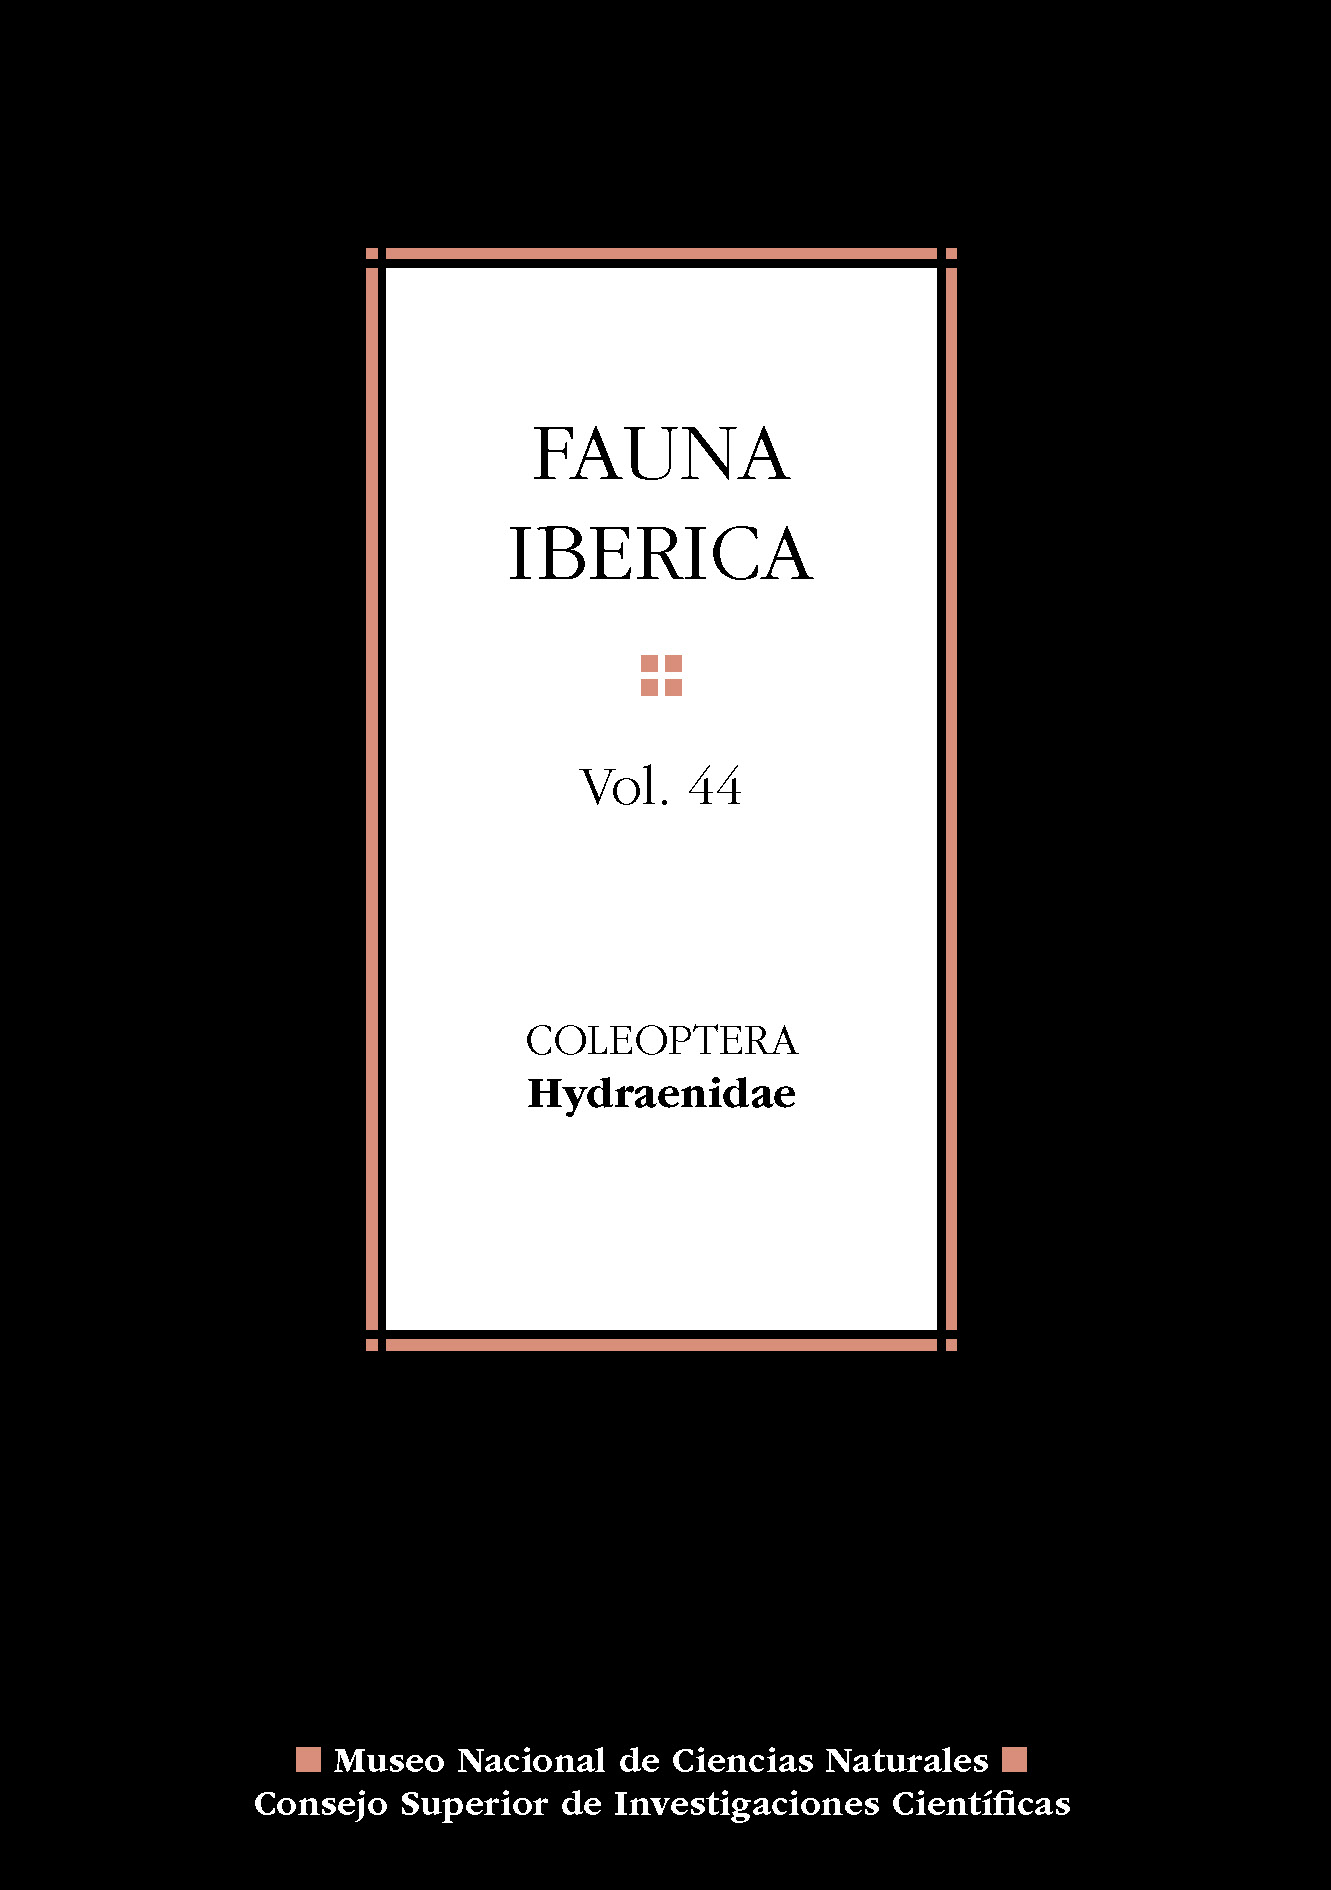 Fauna iberica vol. 44. Coleoptera. Hydraenidae